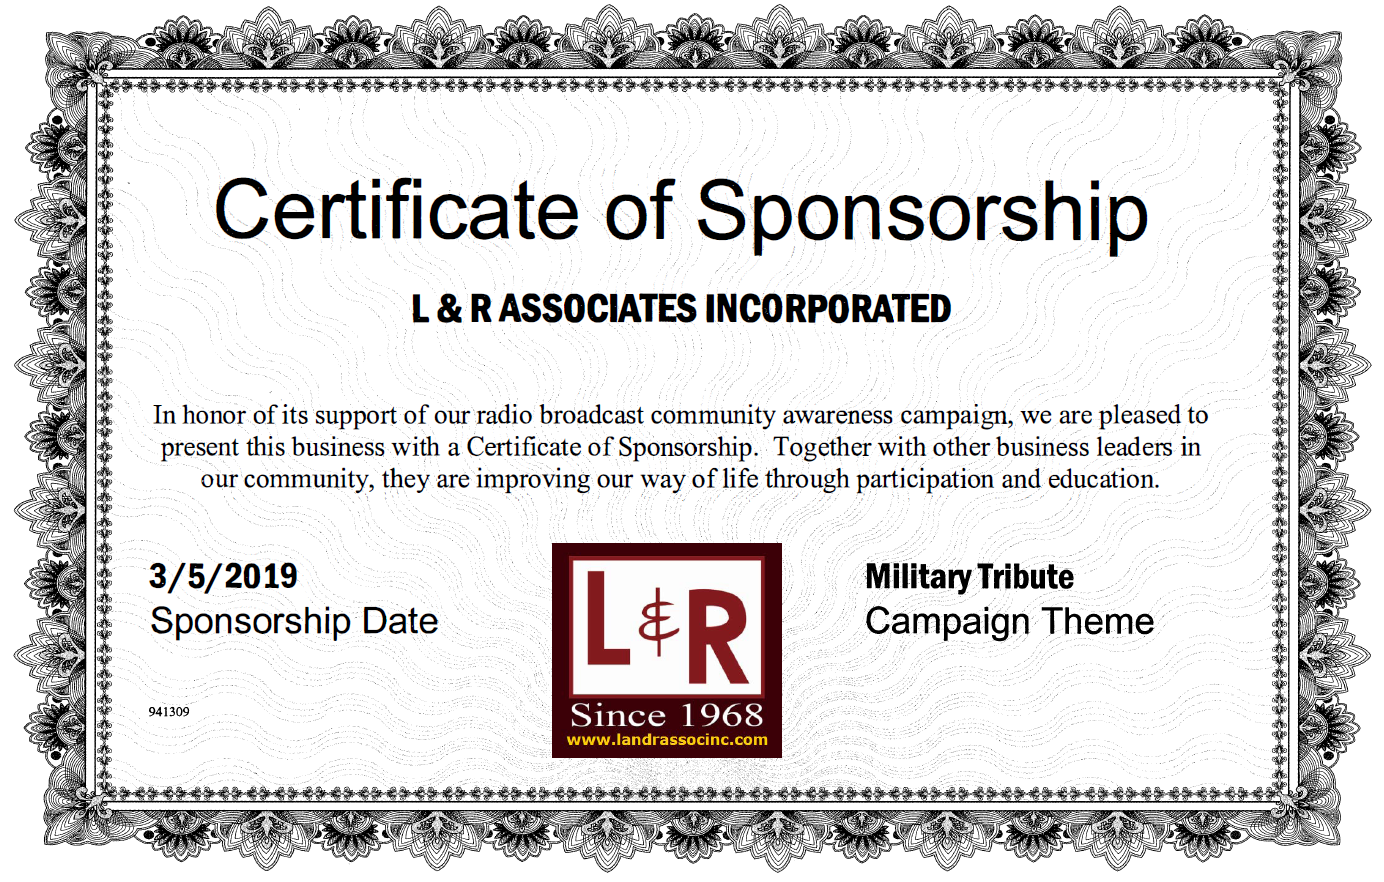 L & R Associates Inc